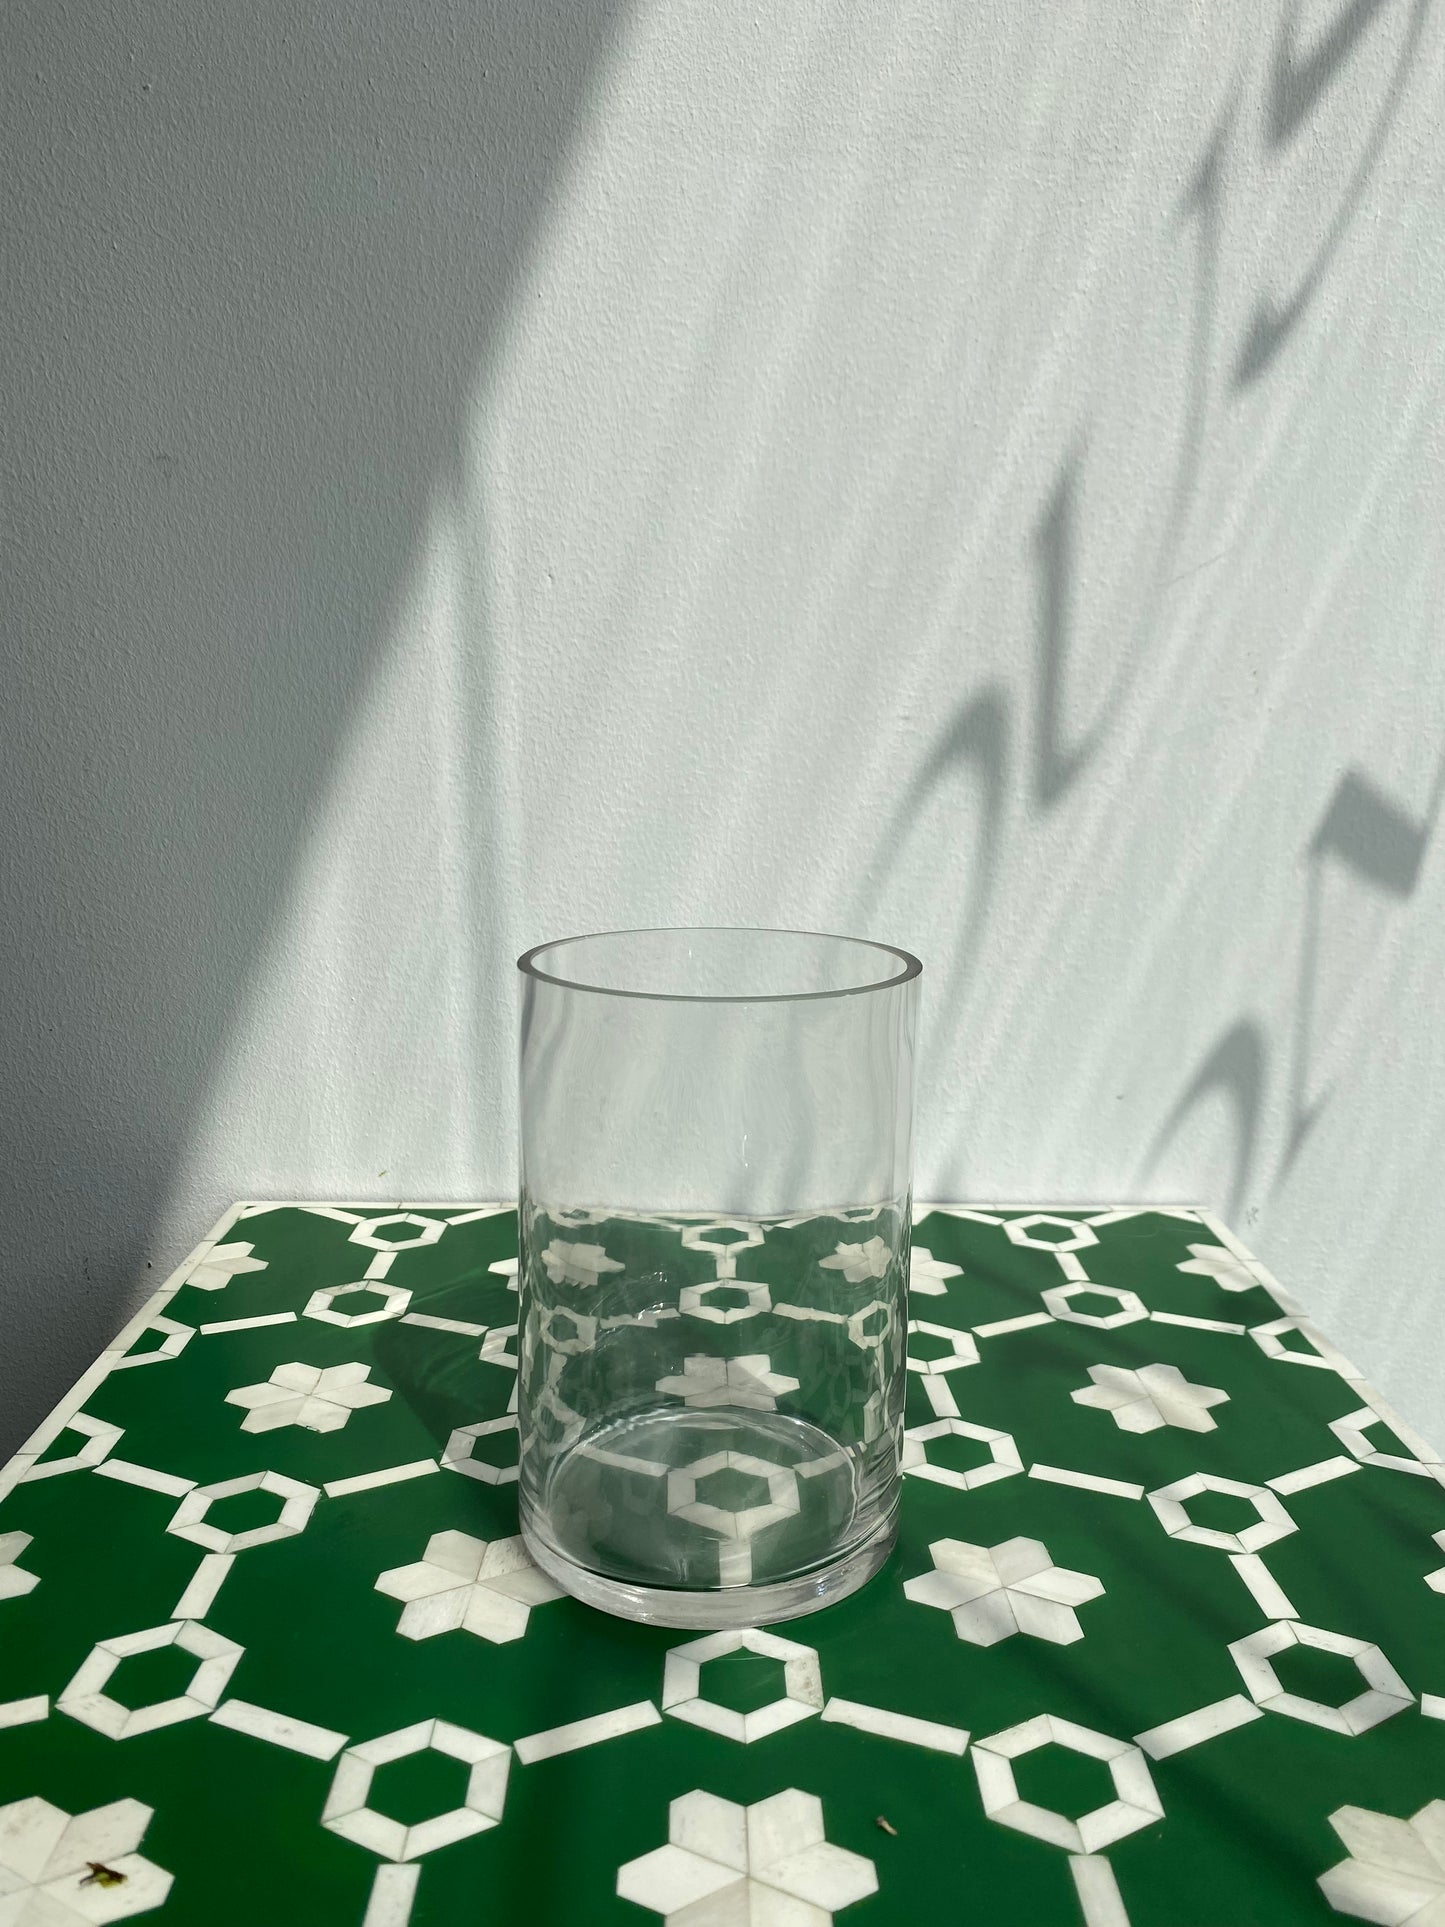 Plain Glass Vase